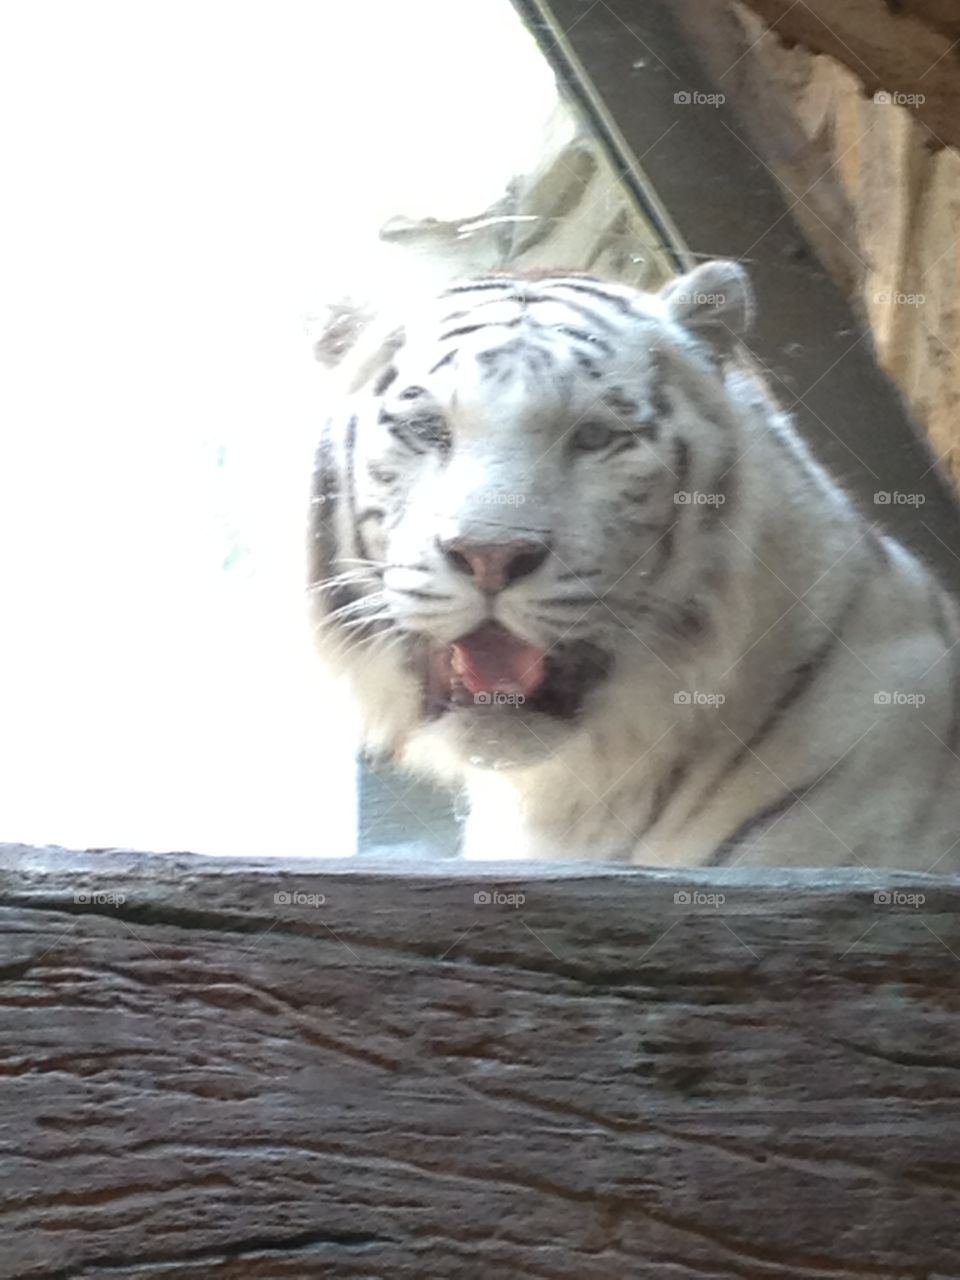 Tiger
White tiger
